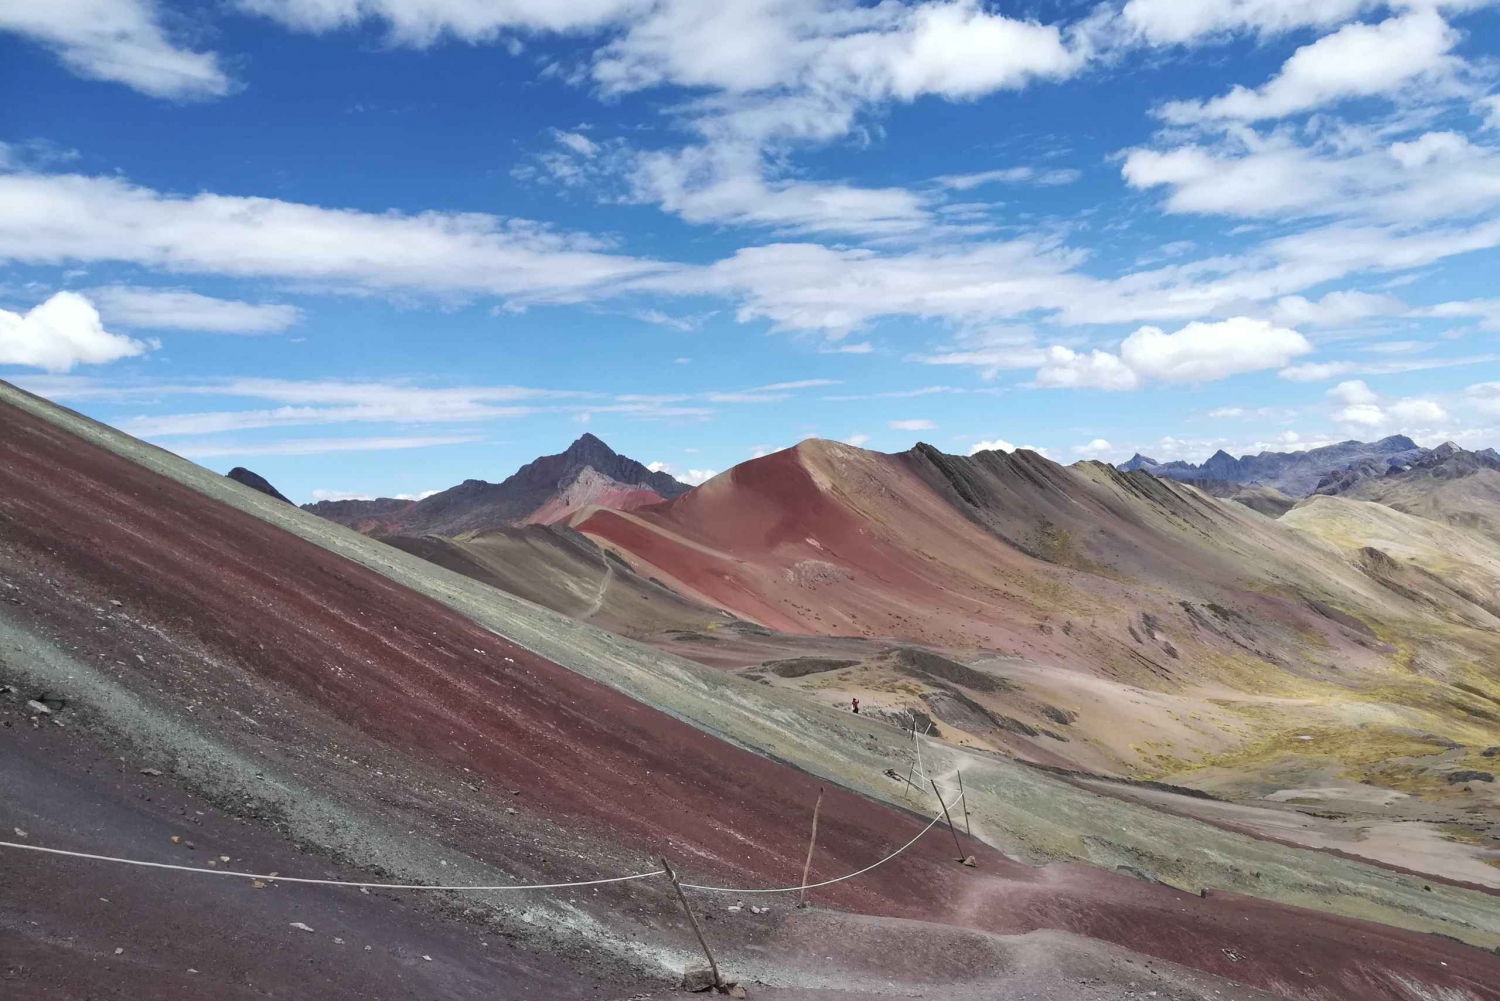 From Cusco: Rainbow Mountain Tour